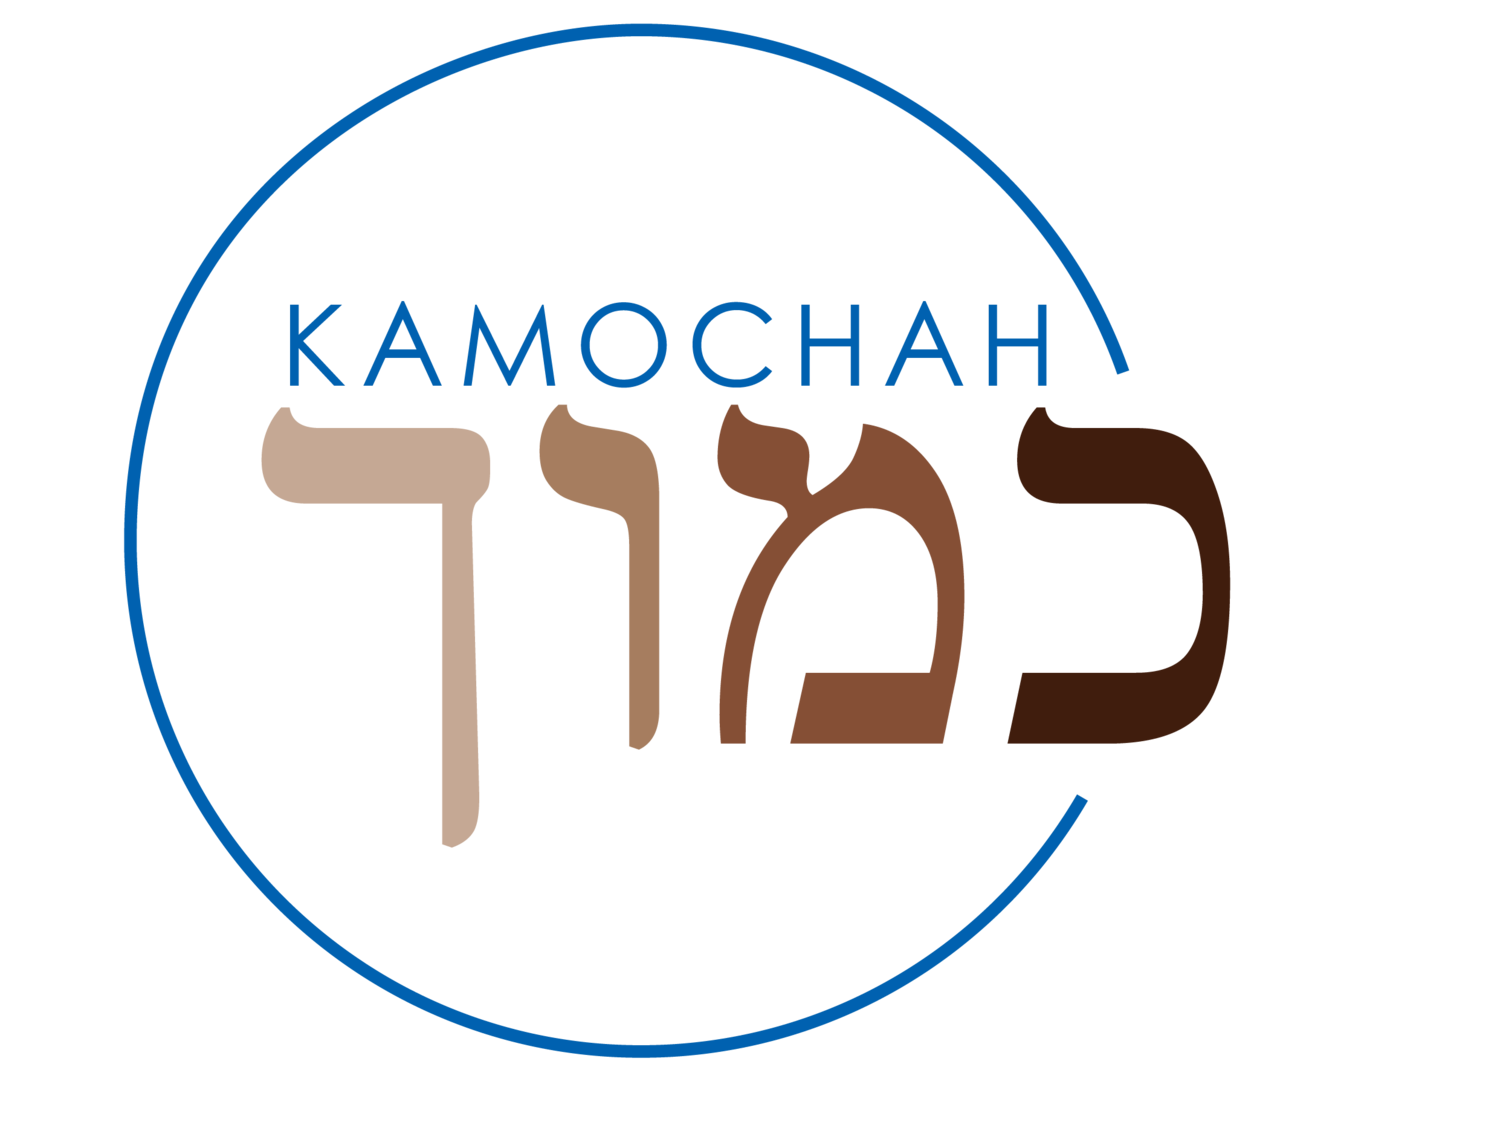 Kamochah